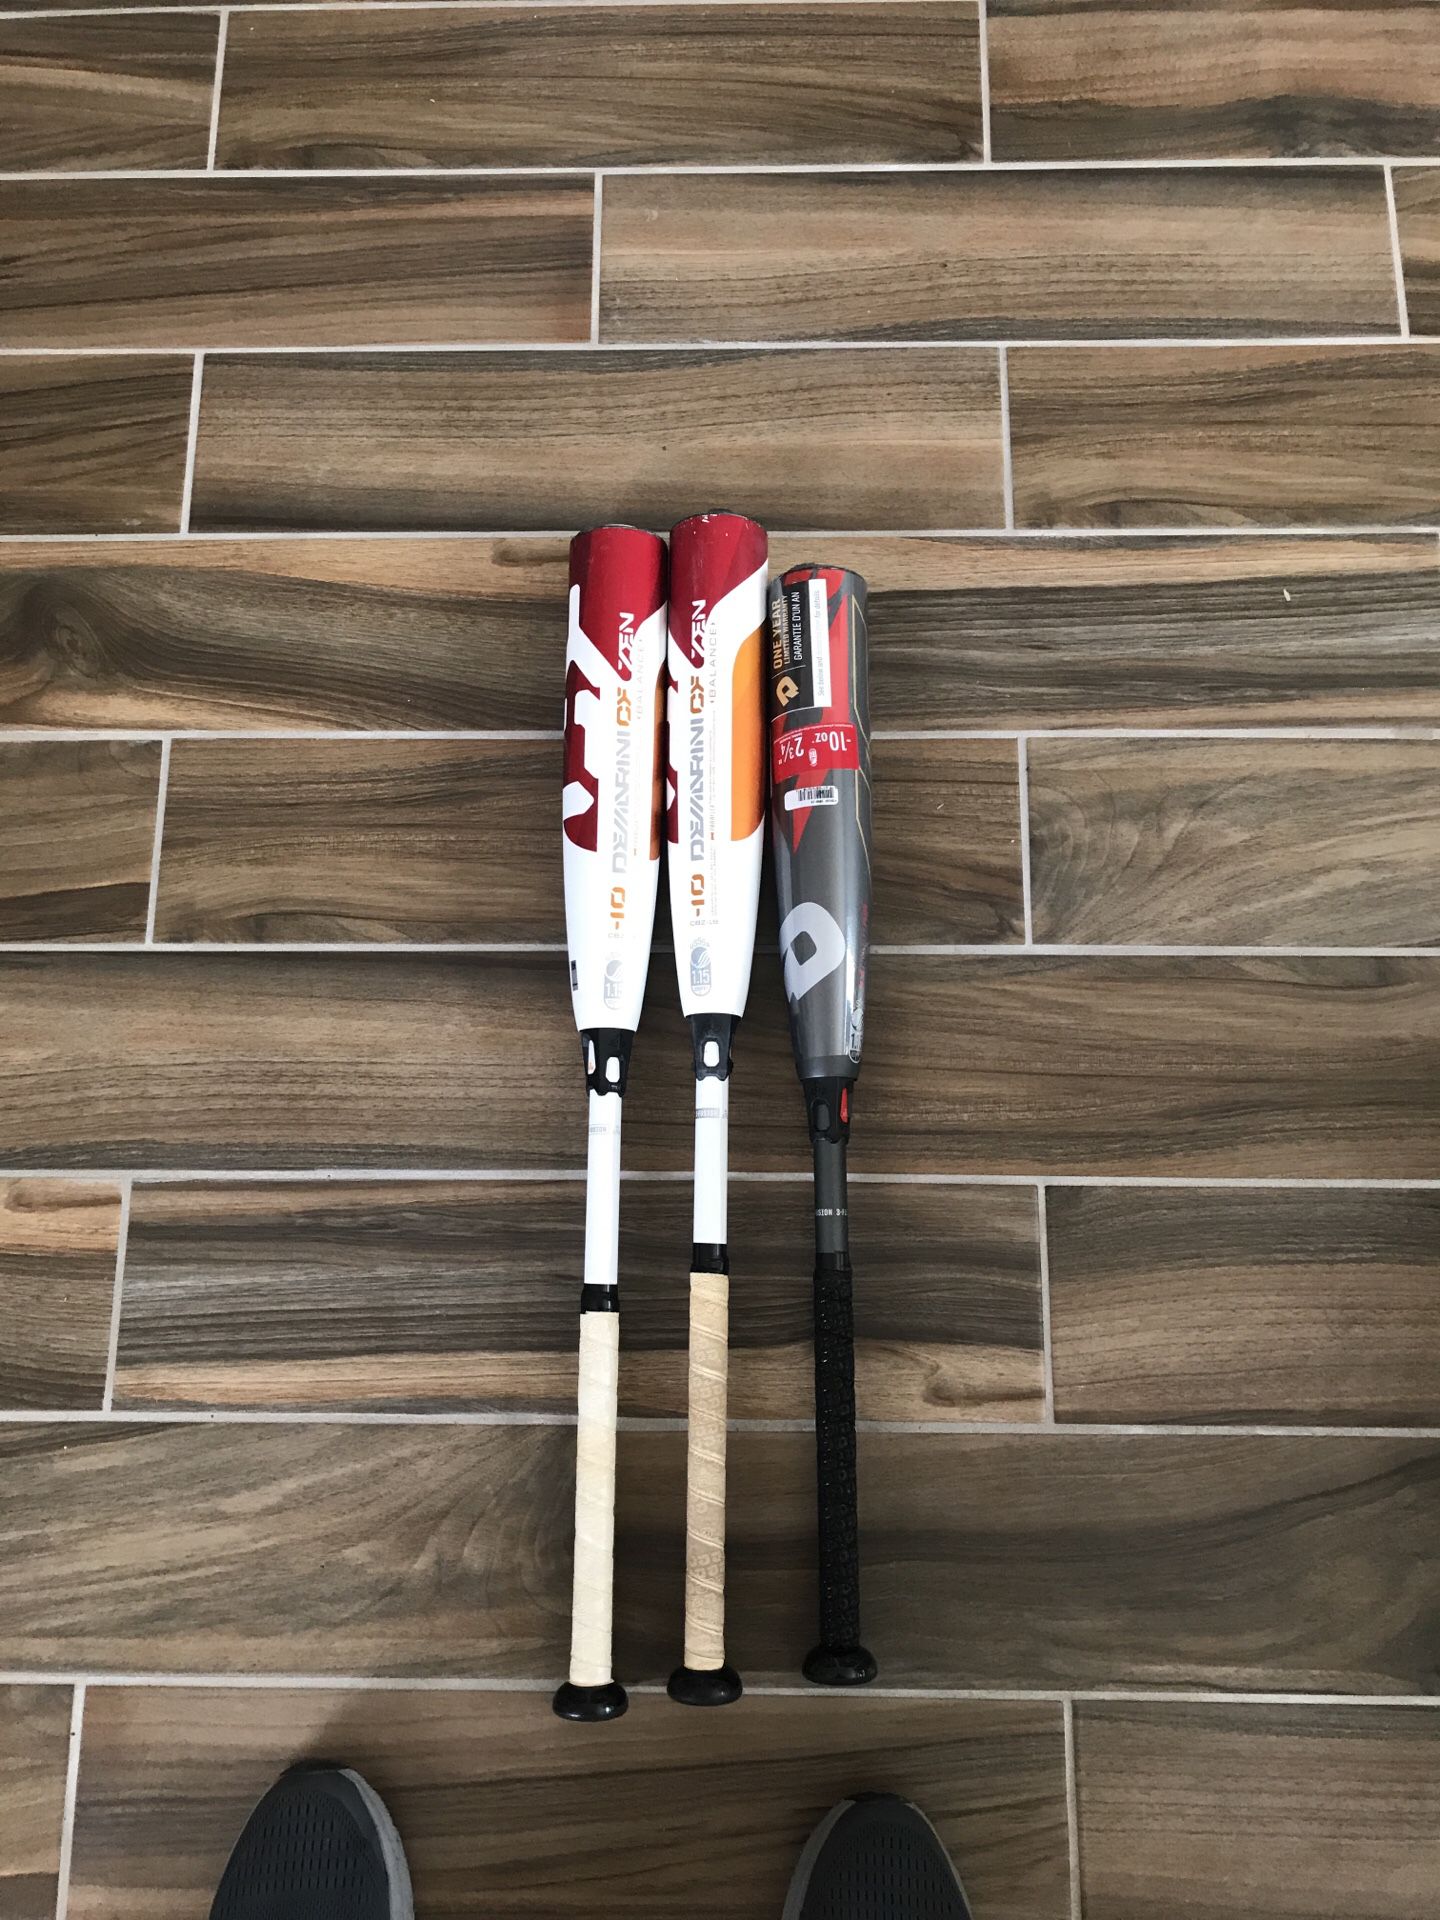 Demarini Zen baseball bats